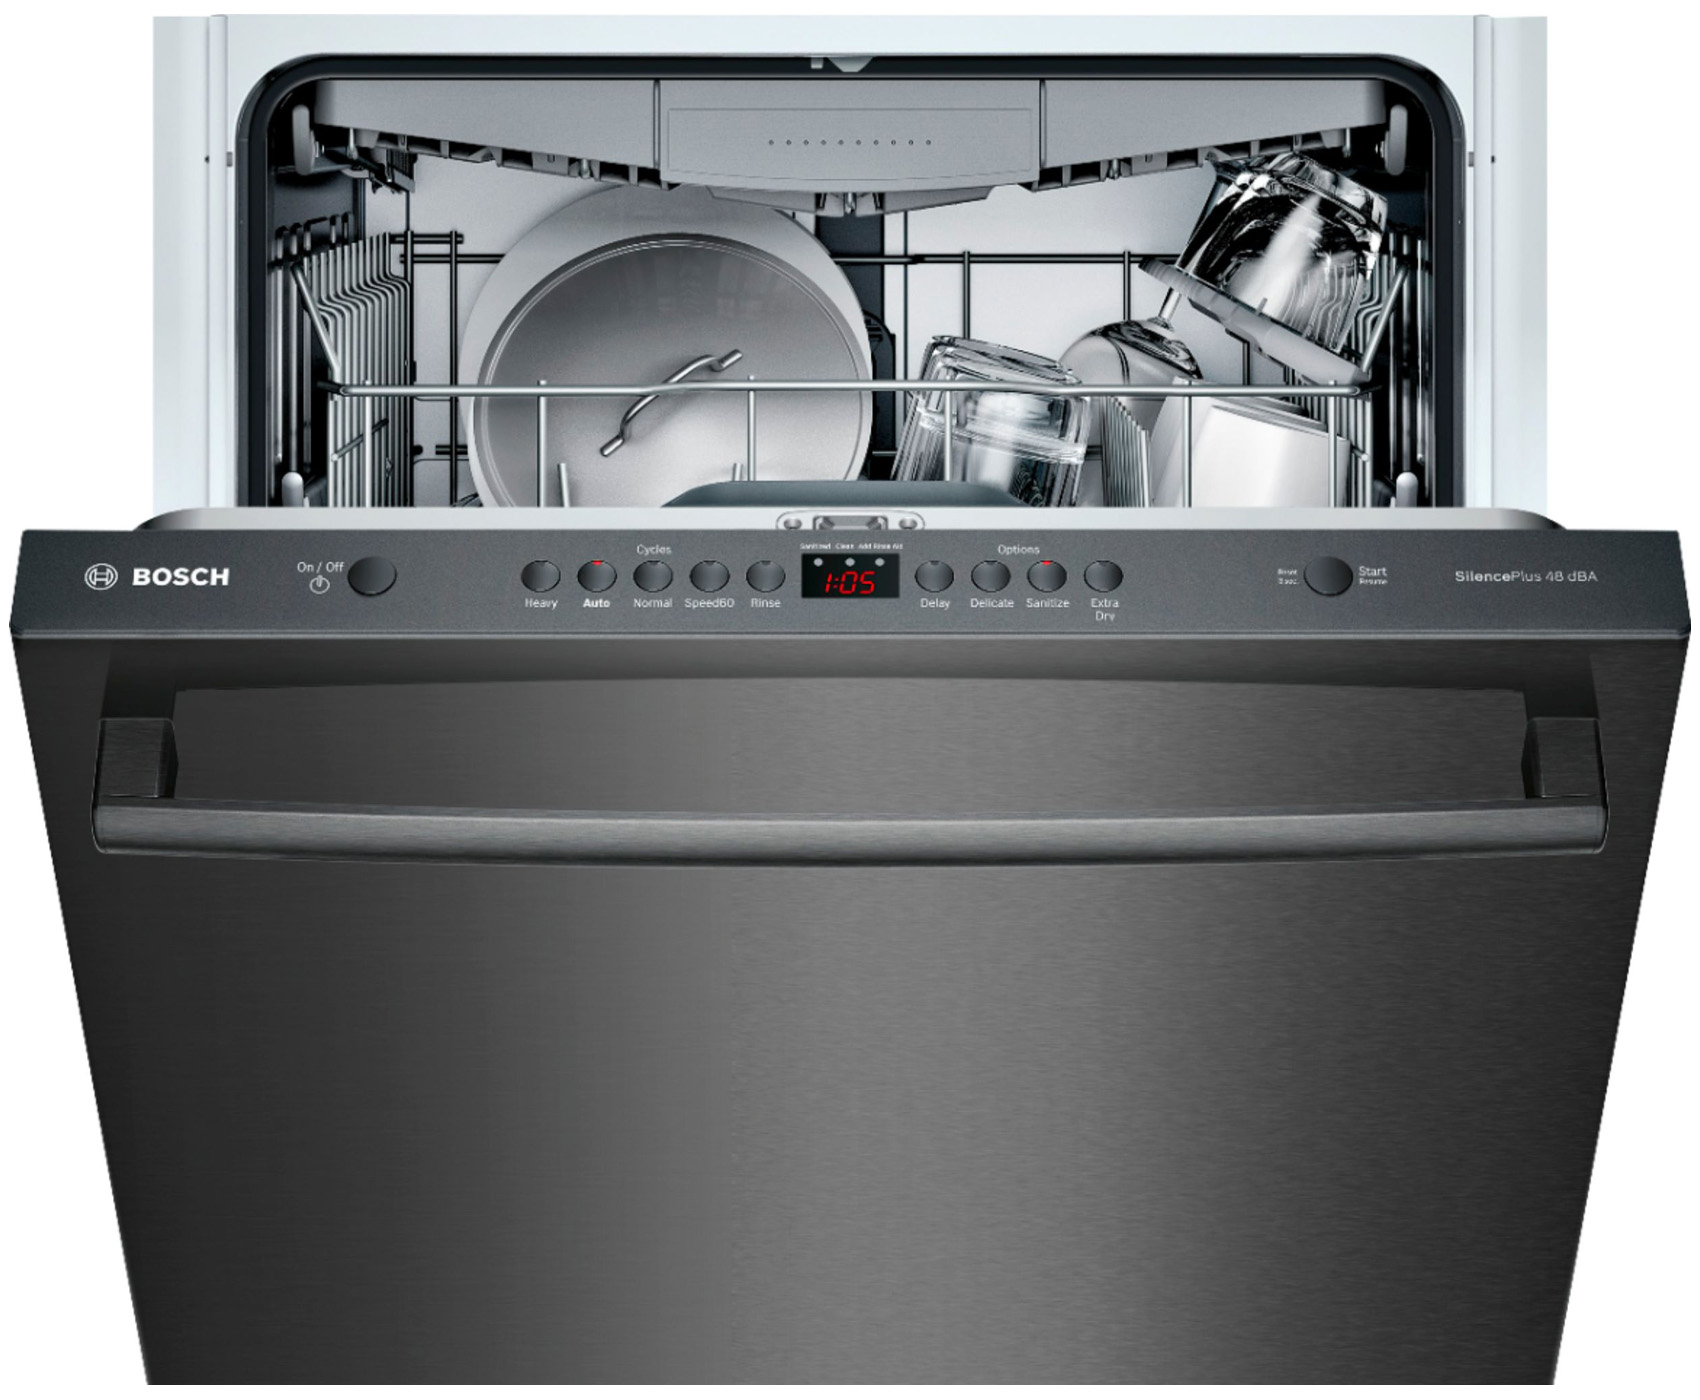 Bosch dishwasher sanitize light blinking 1.0